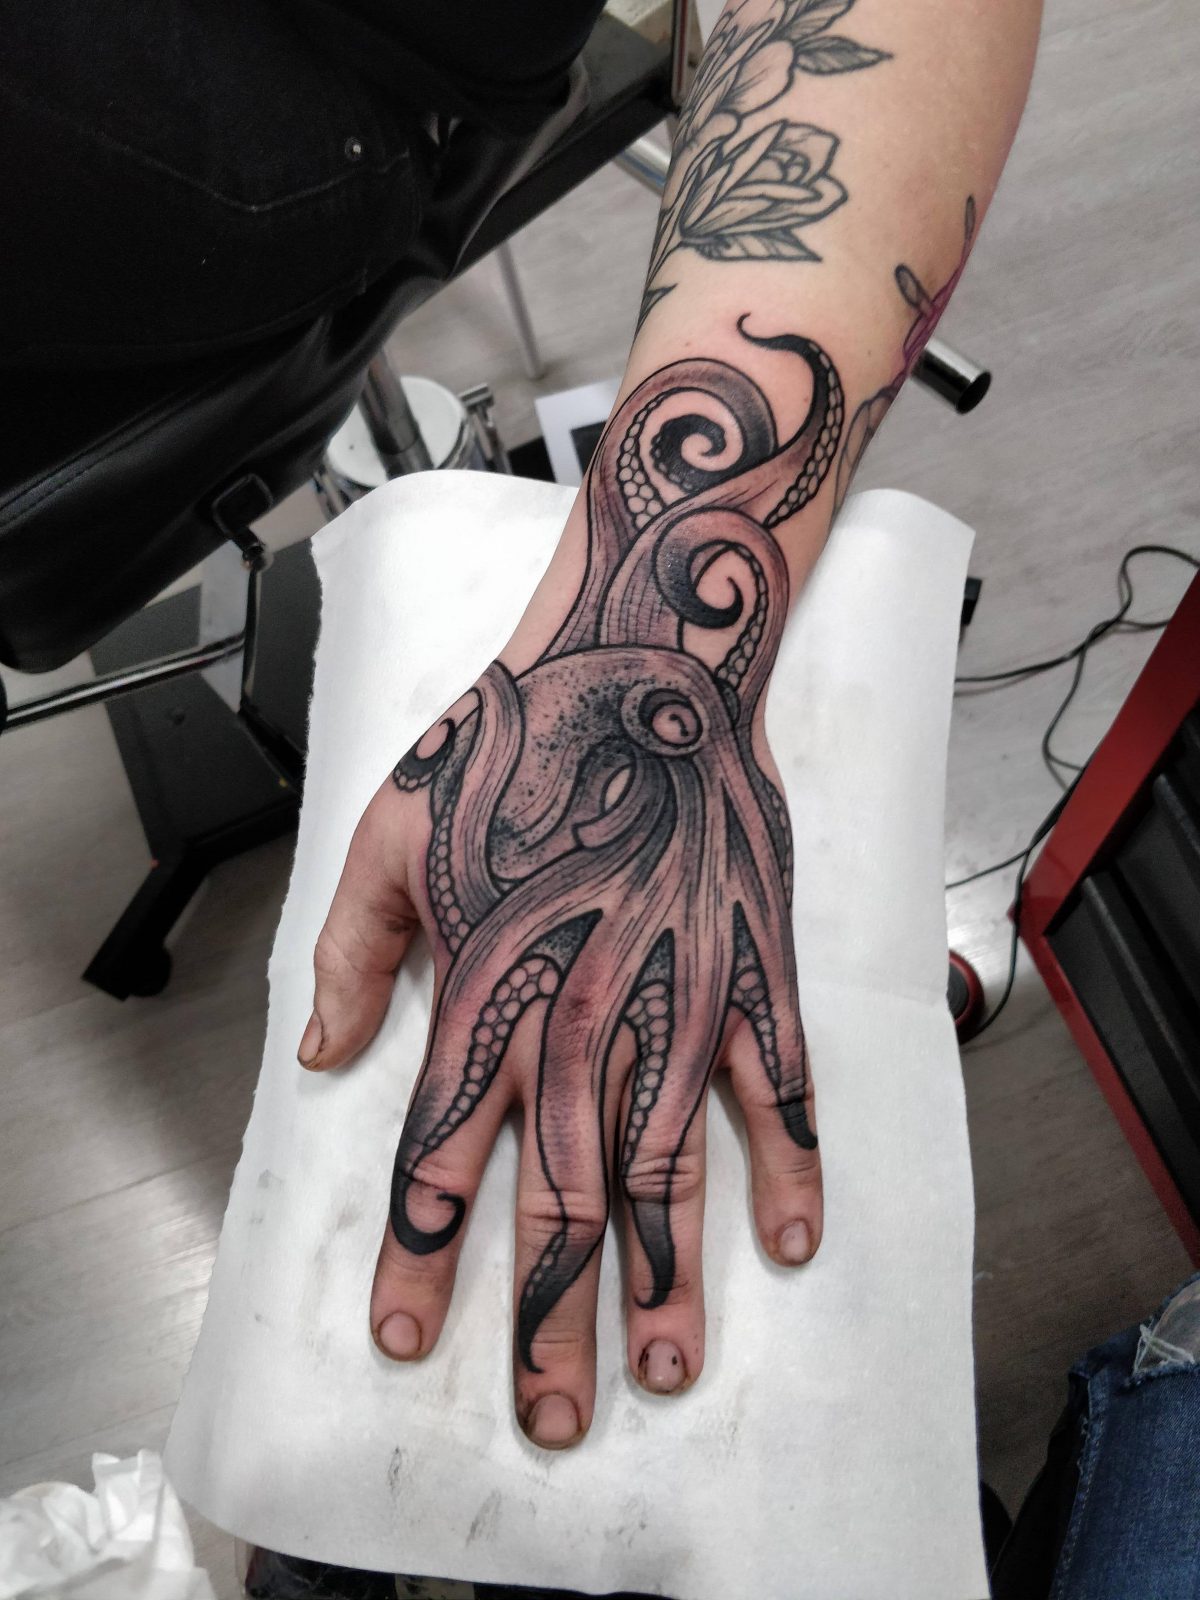 9. Octopus Hand Tattoo.